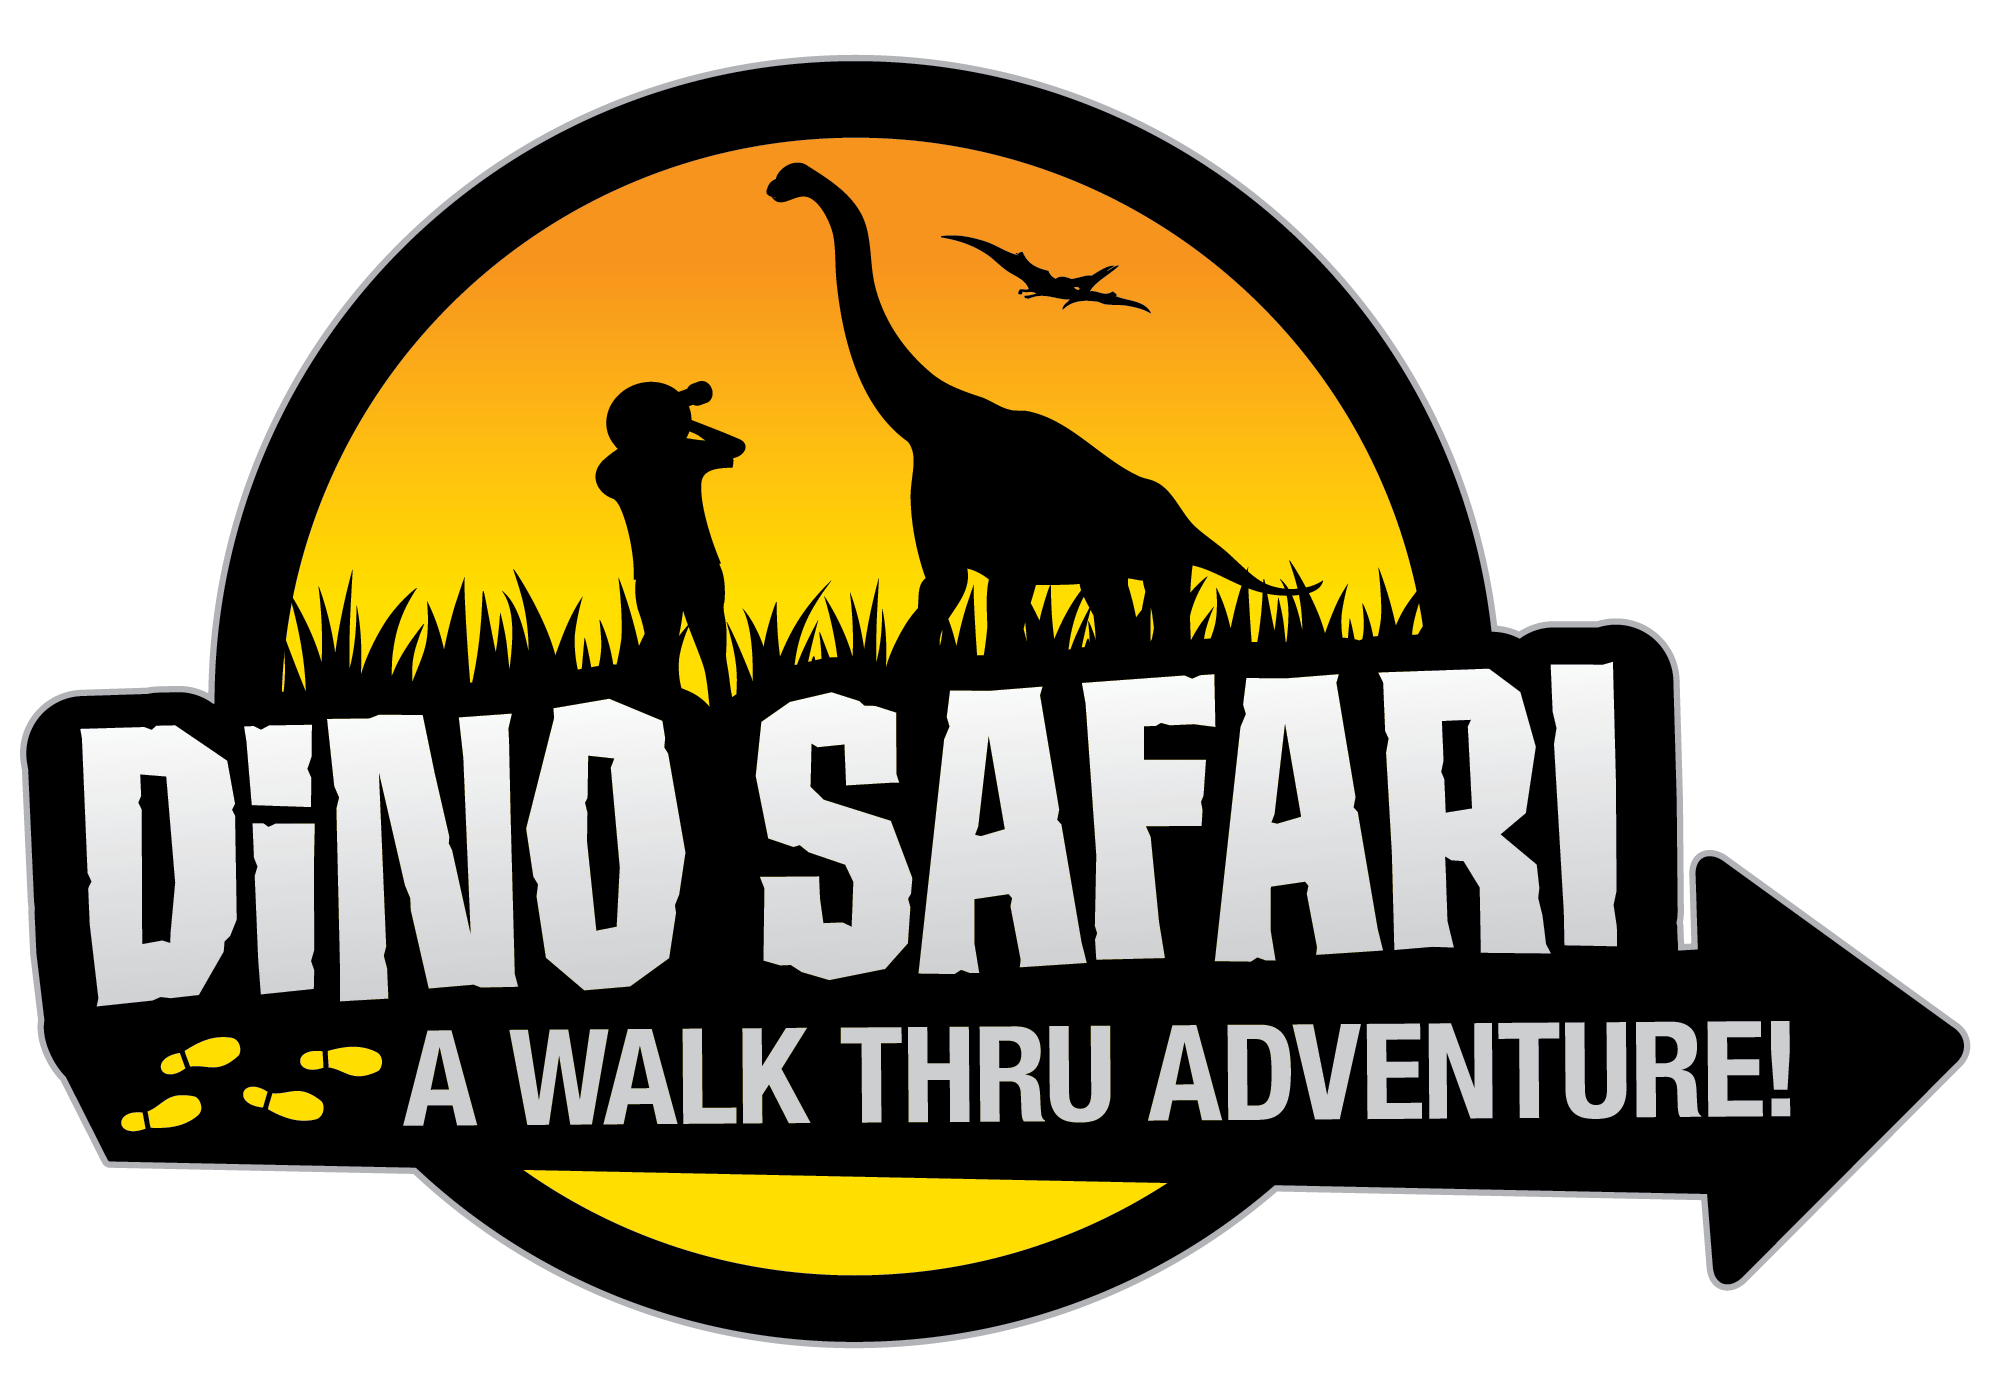 dino safari discount code